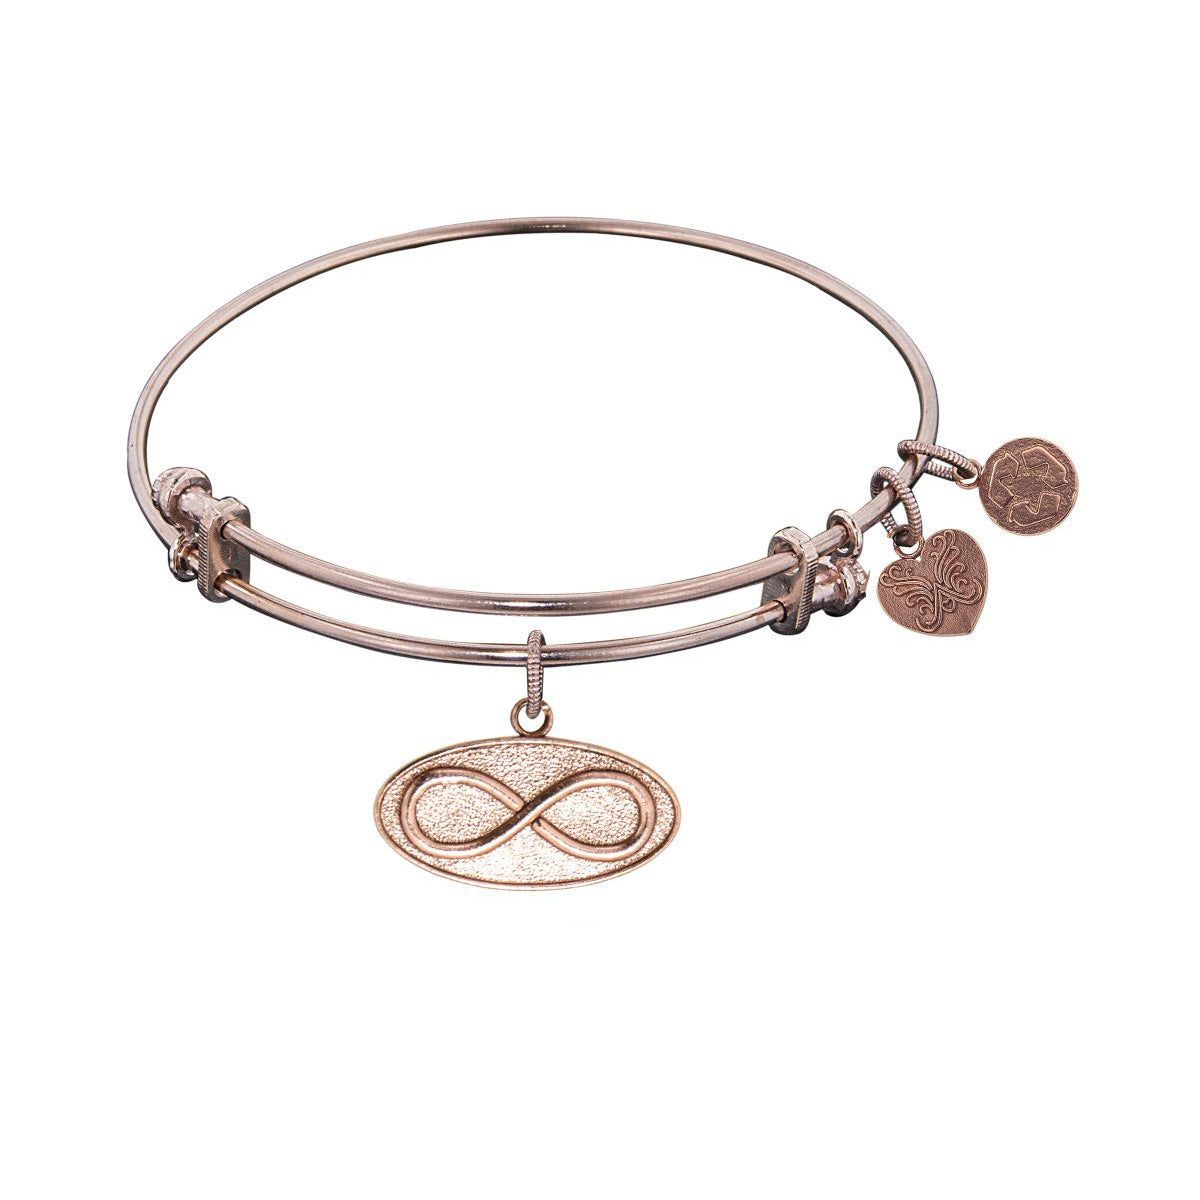 Stipple Finish Brass Infinity Angelica Bangle Bracelet, 7.25" fine designer jewelry for men and women